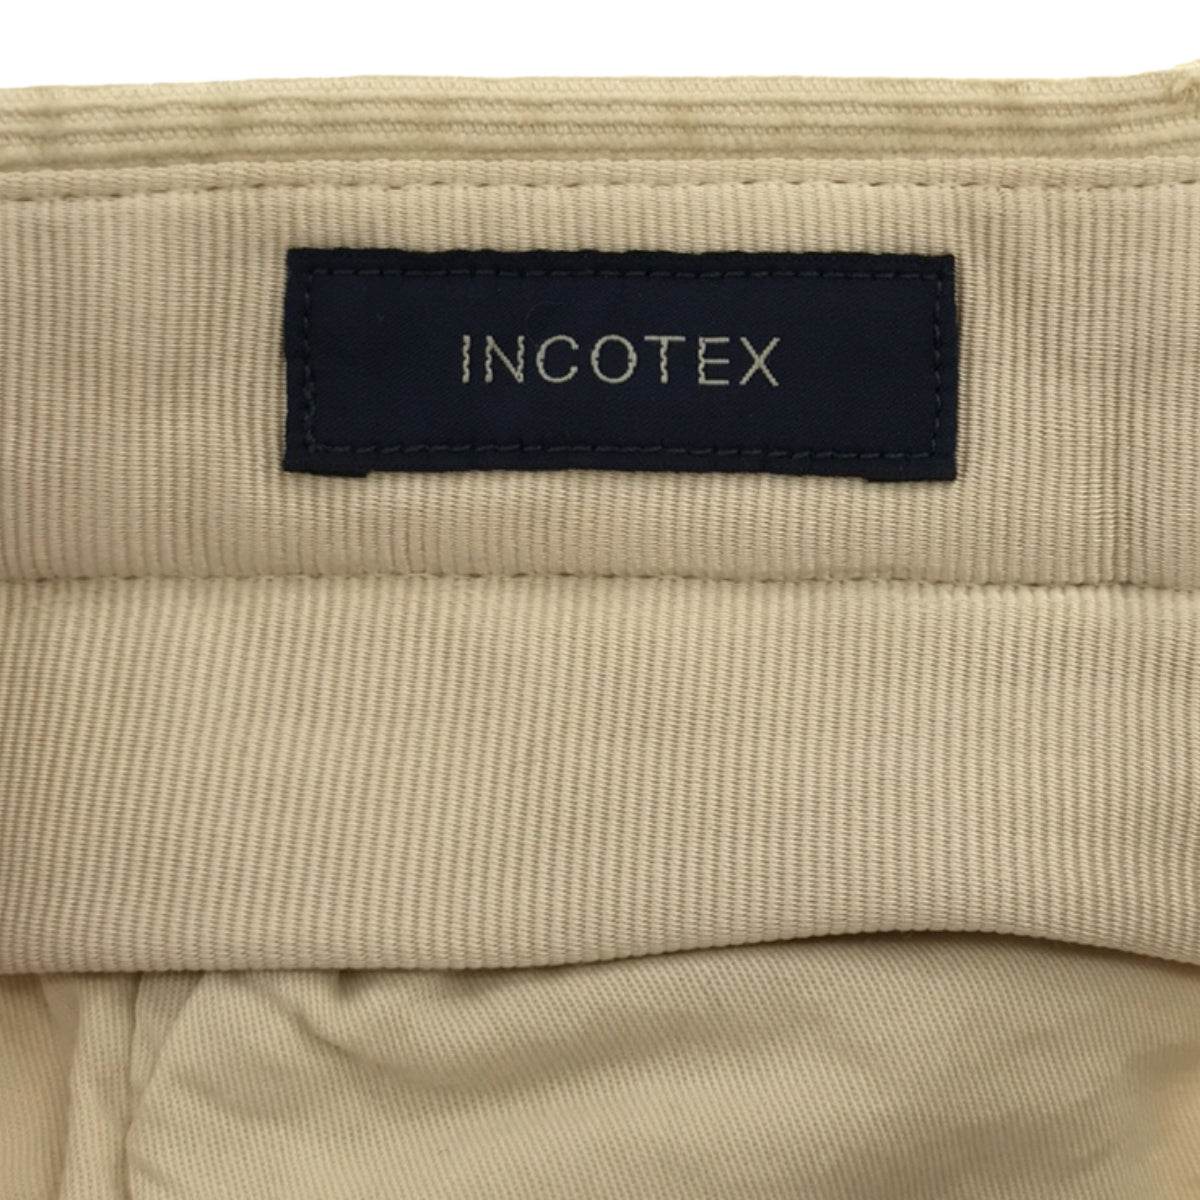 INCOTEX / インコテックス | SLIM FIT コーデュロイ ストレッチ テーパードパンツ | 48 | メンズ